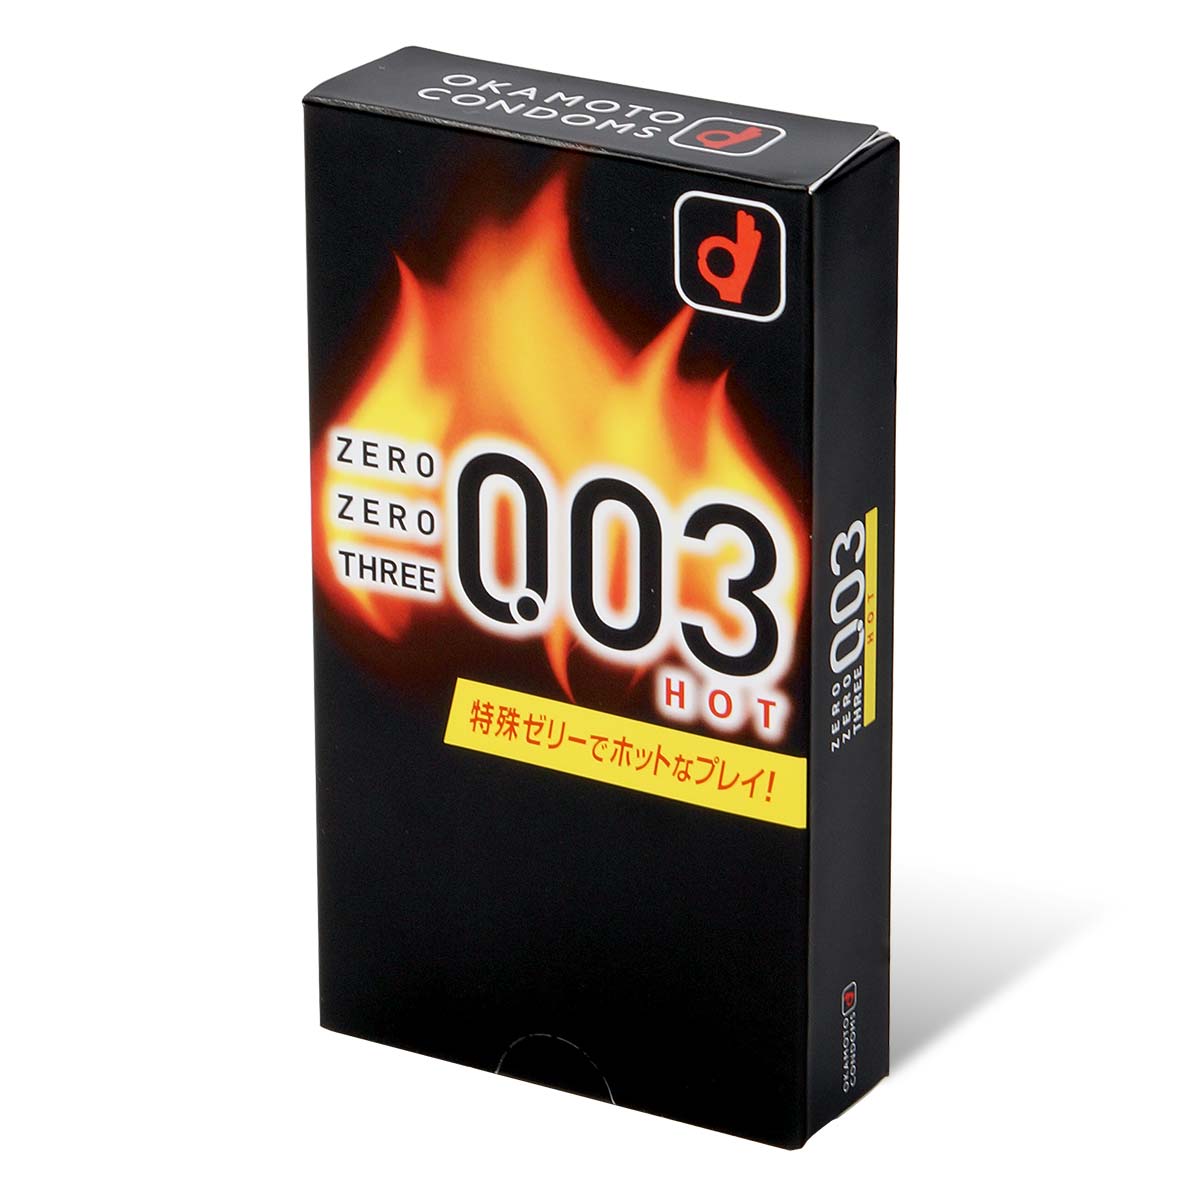 Zero Zero Three 0.03 Hot (Japan Edition) 10's Pack Latex Condom-p_1